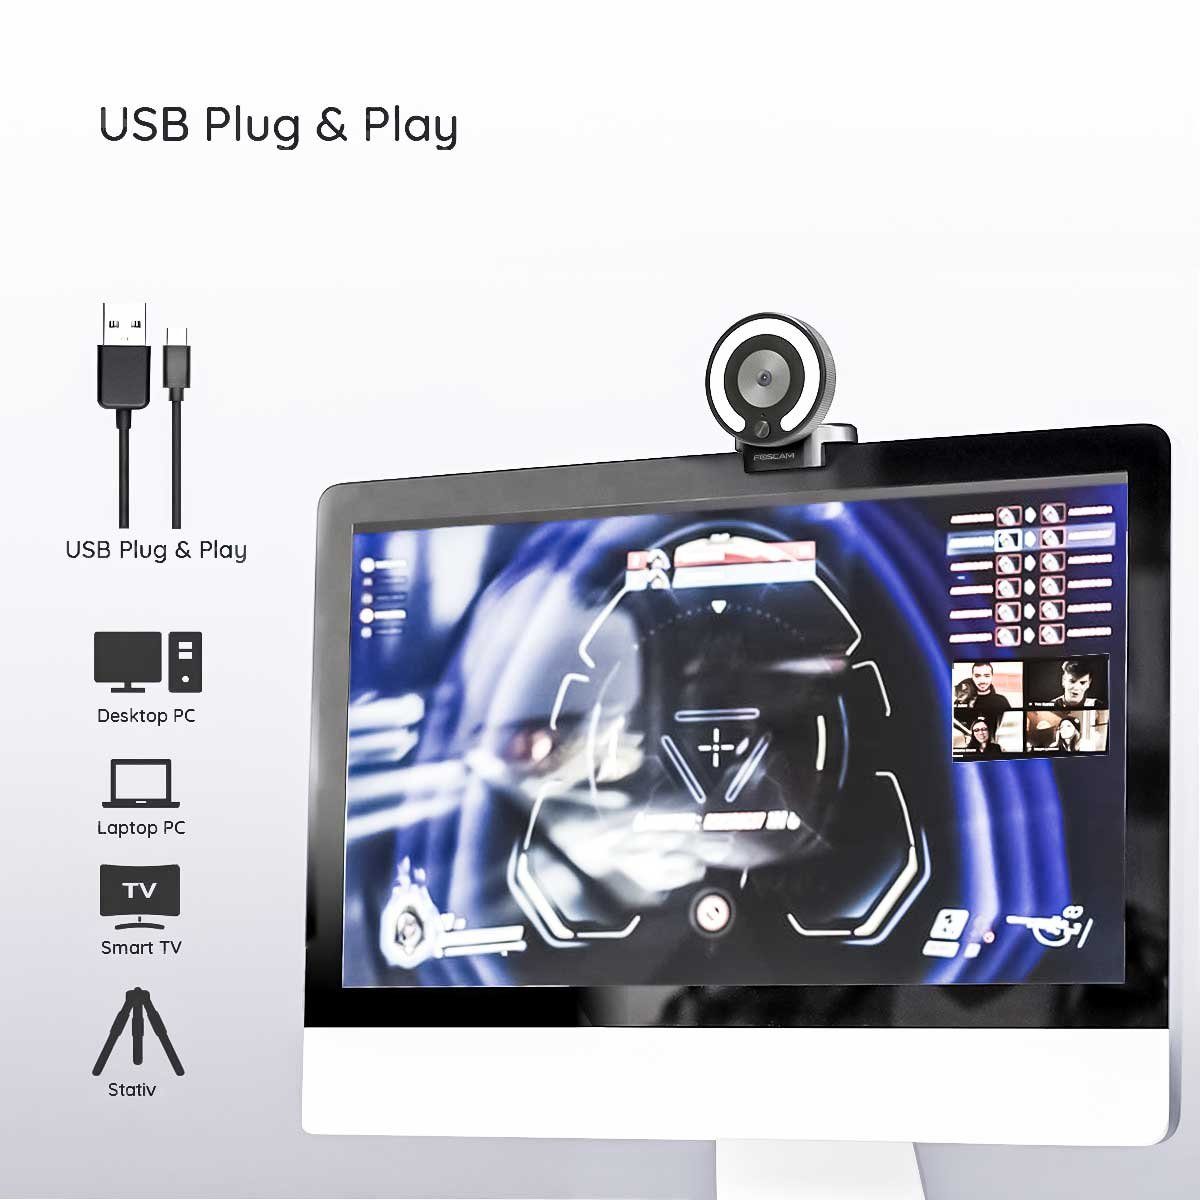 Plug Integriertes HD-Webcam Foscam Full W28 Play) Mikrofon, (Autofokus, and Helligkeitseinstellung,